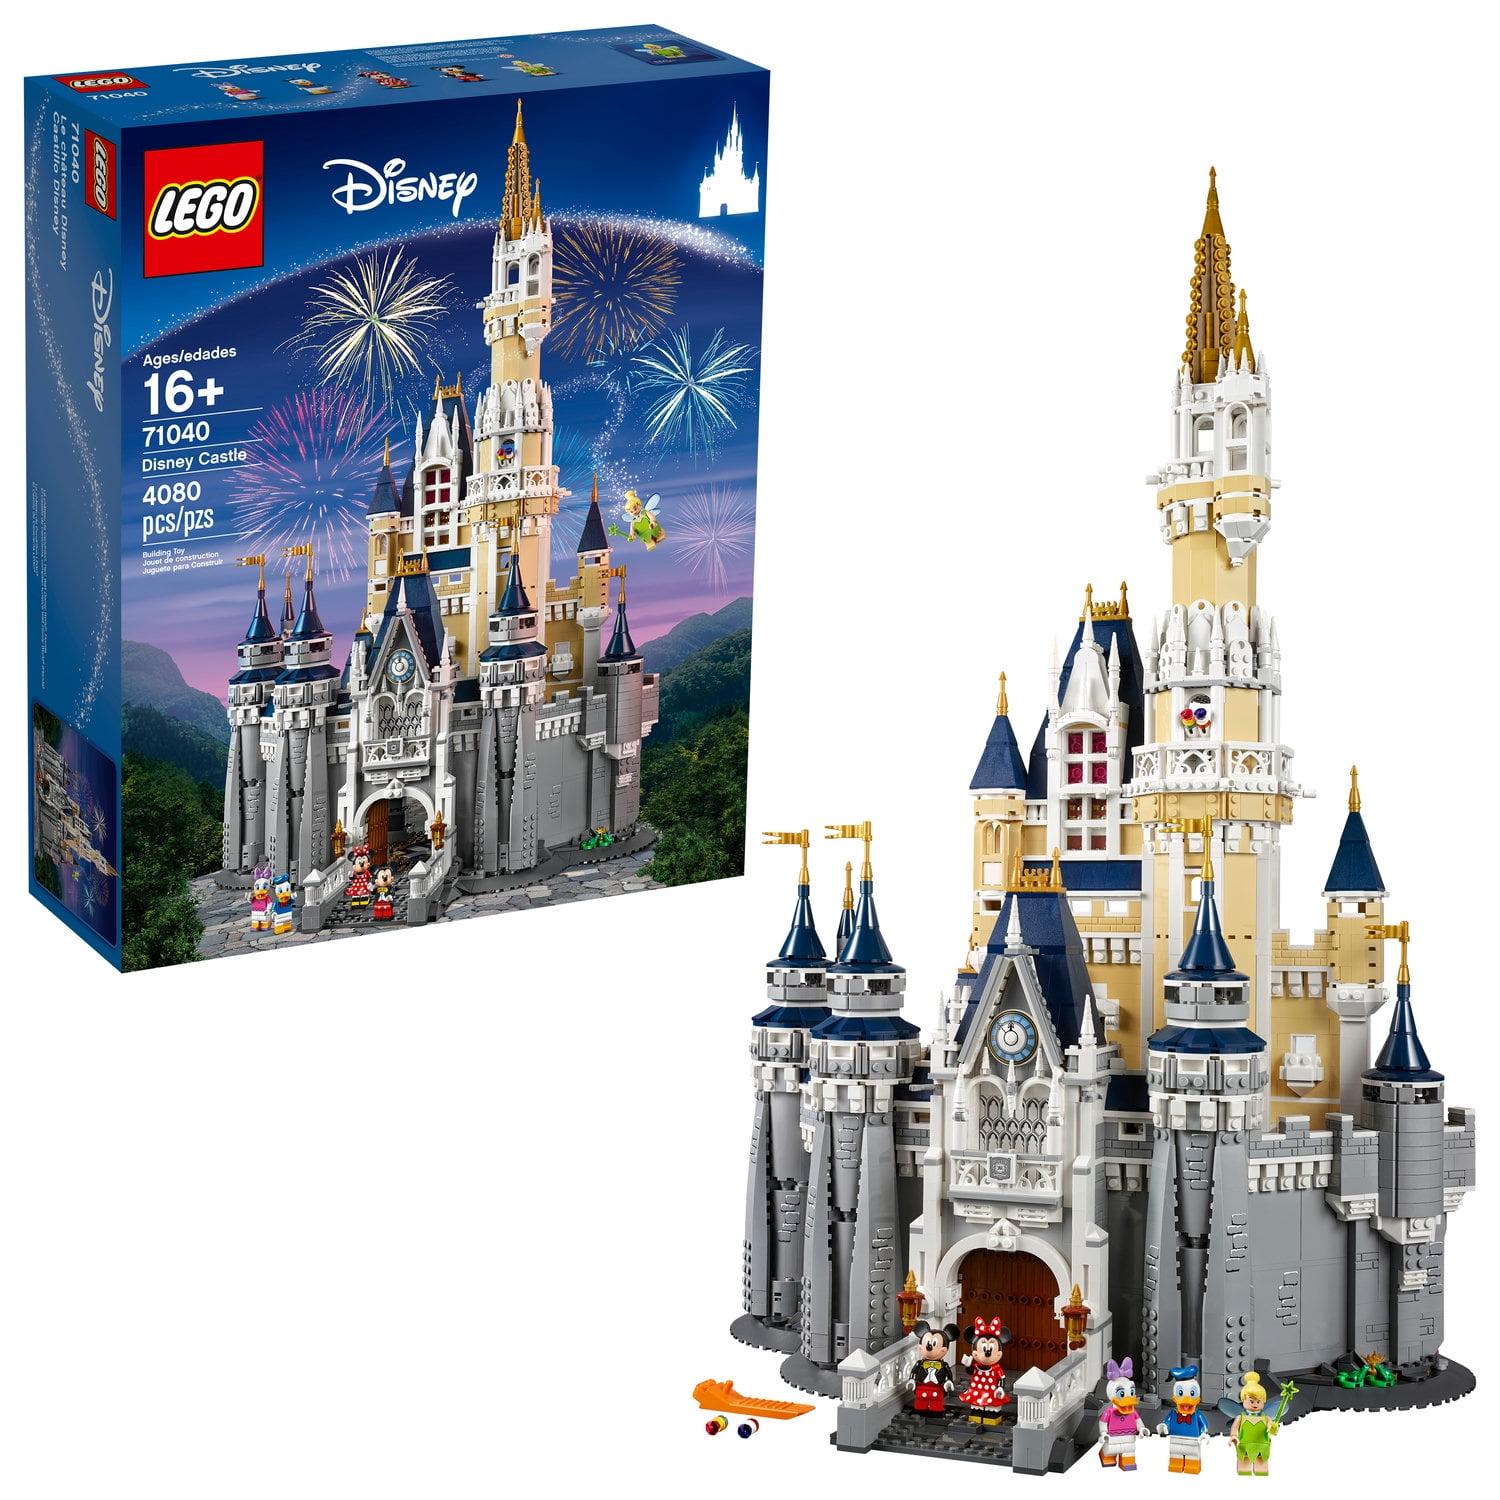 Disney Castle LEGO Building Set - 4080 pezzi Italy